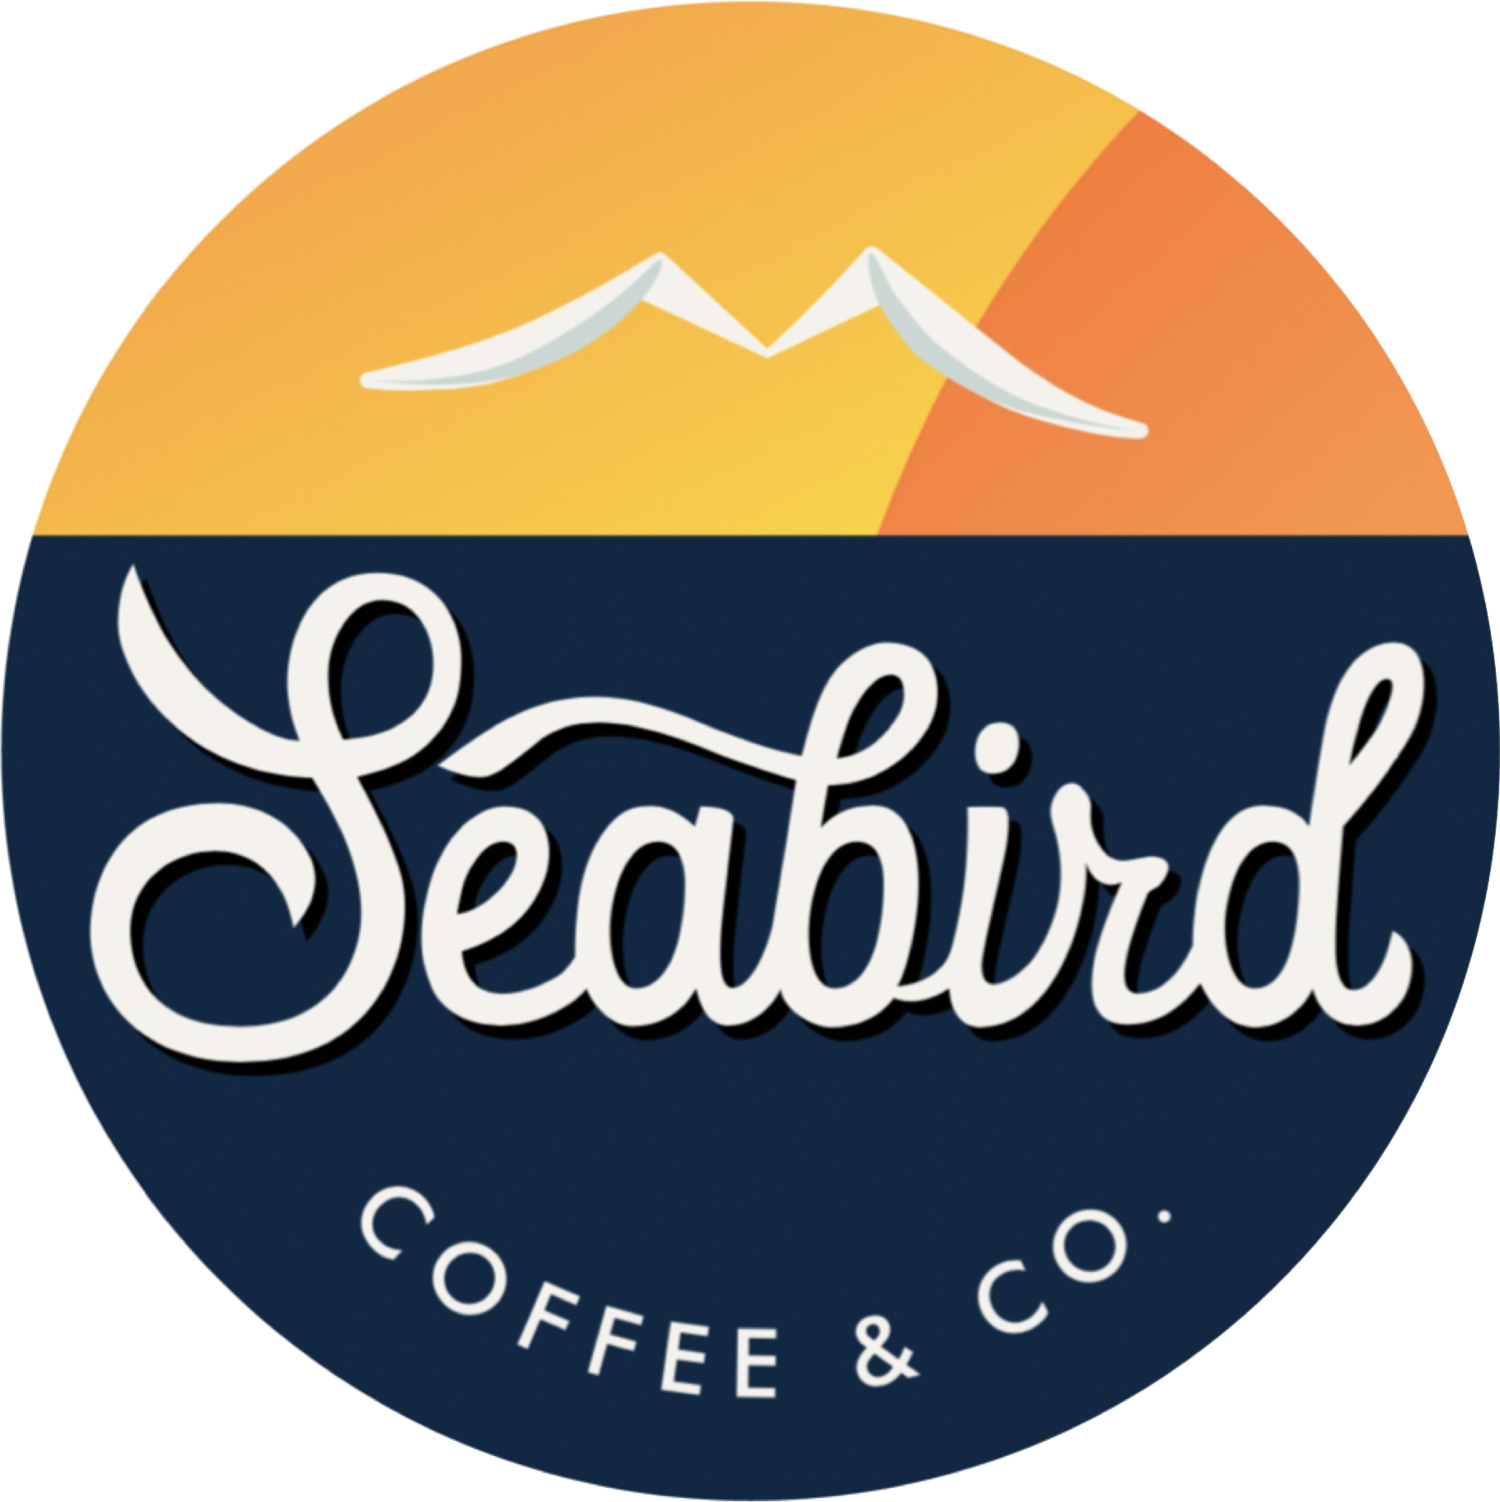 Seabird Logo.png